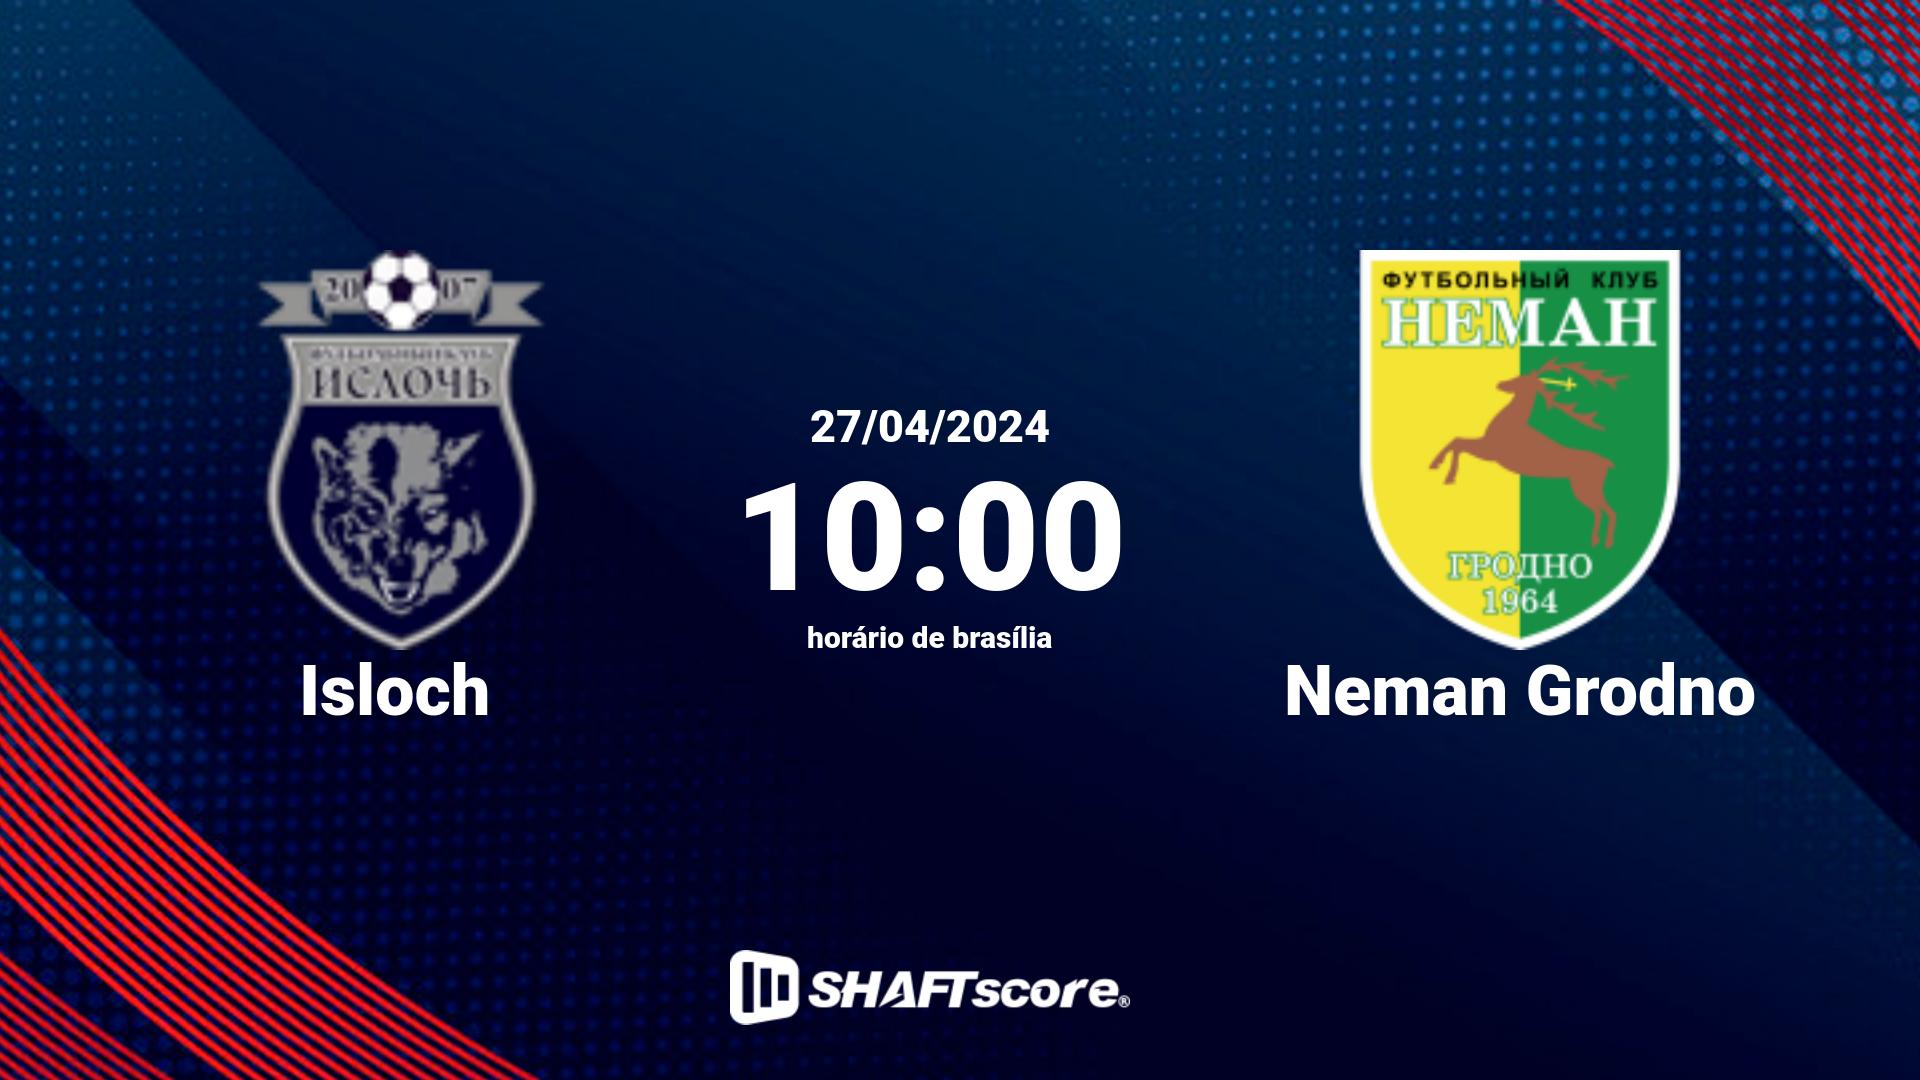 Estatísticas do jogo Isloch vs Neman Grodno 27.04 10:00